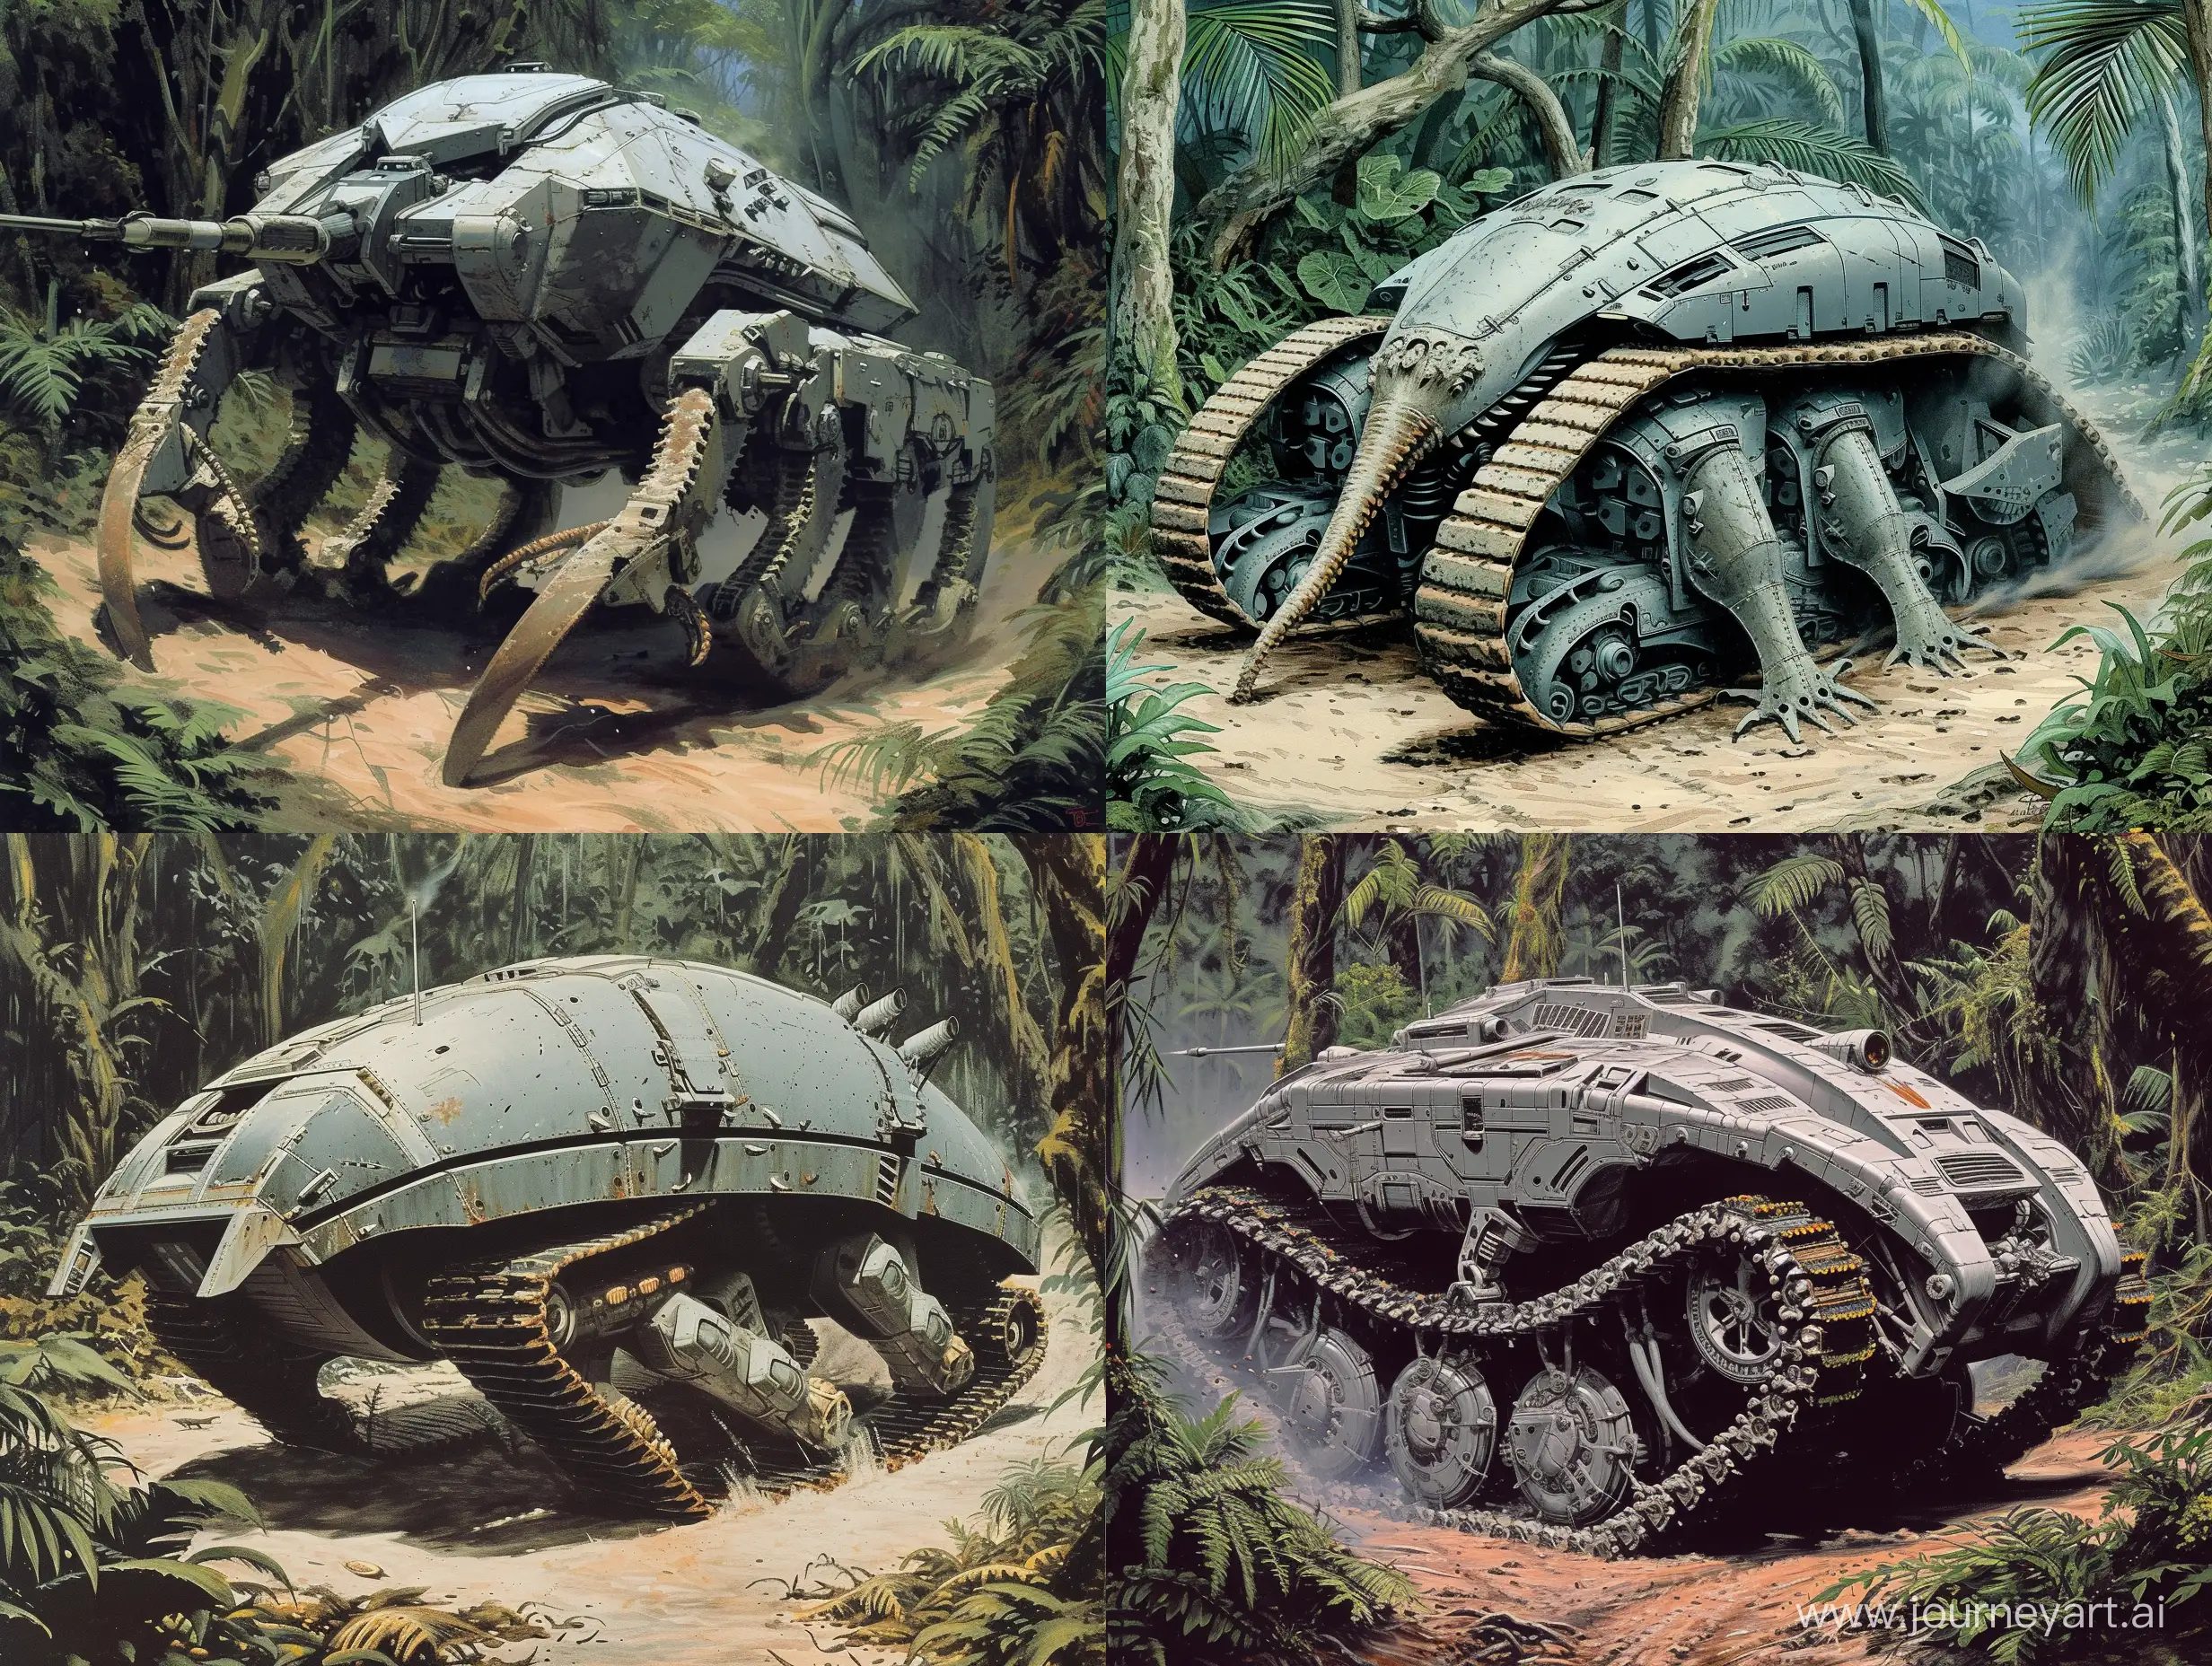 Retro-Science-Fiction-Art-Armored-Trilobite-Tank-Battles-in-Jungle